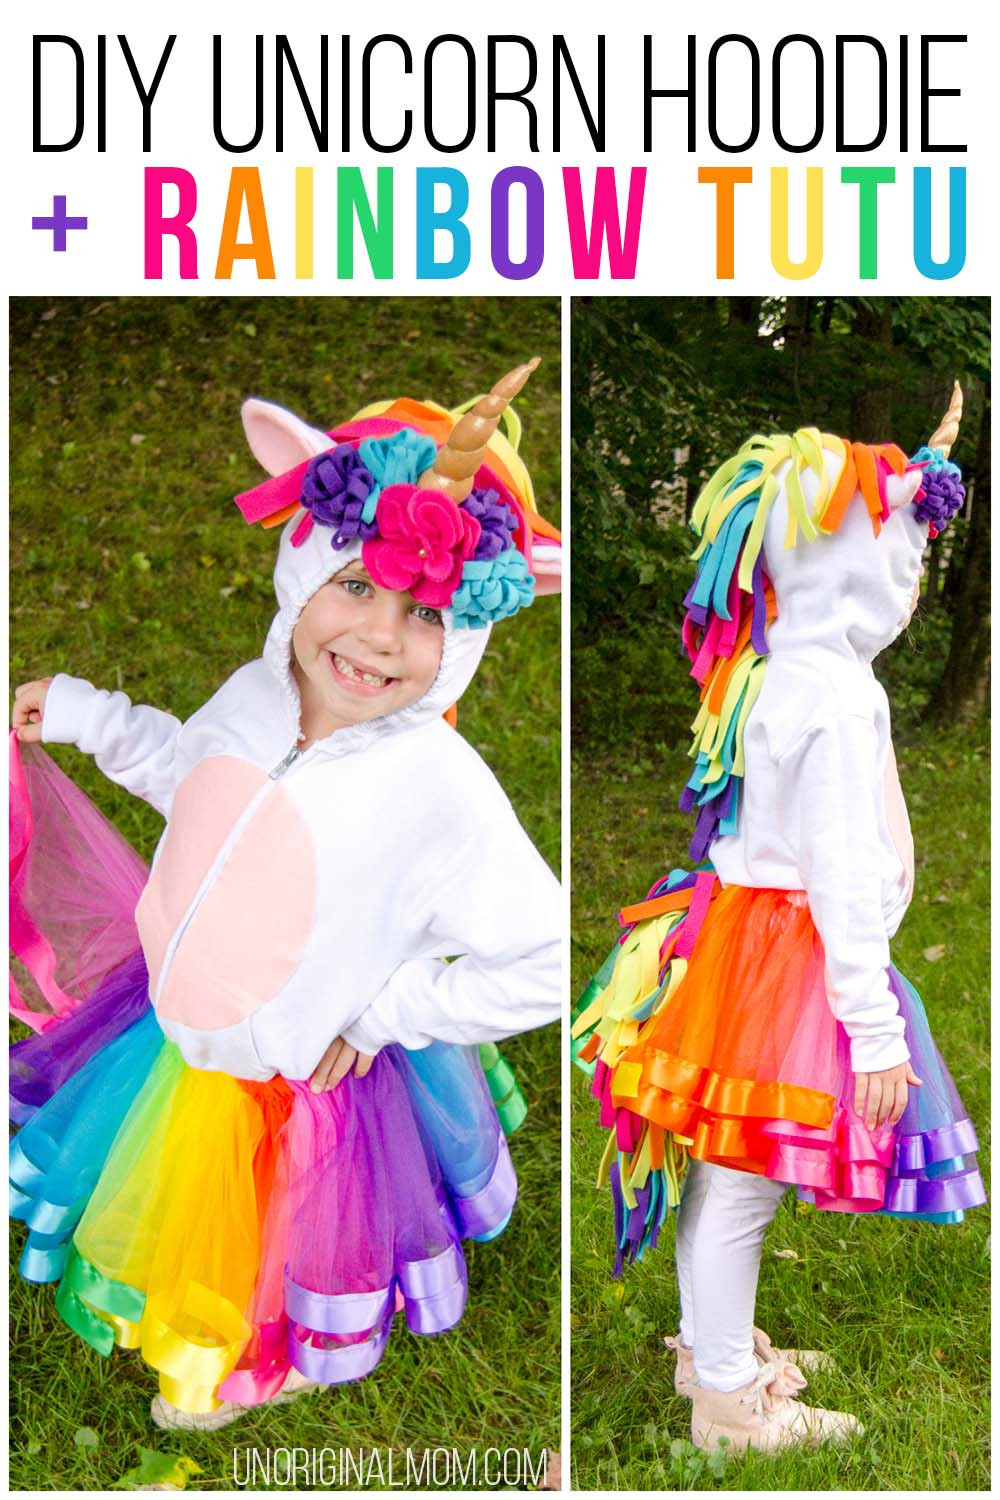 Unicorn DIY Costume
 DIY Unicorn Hoo Costume with Rainbow Tutu Tutorial